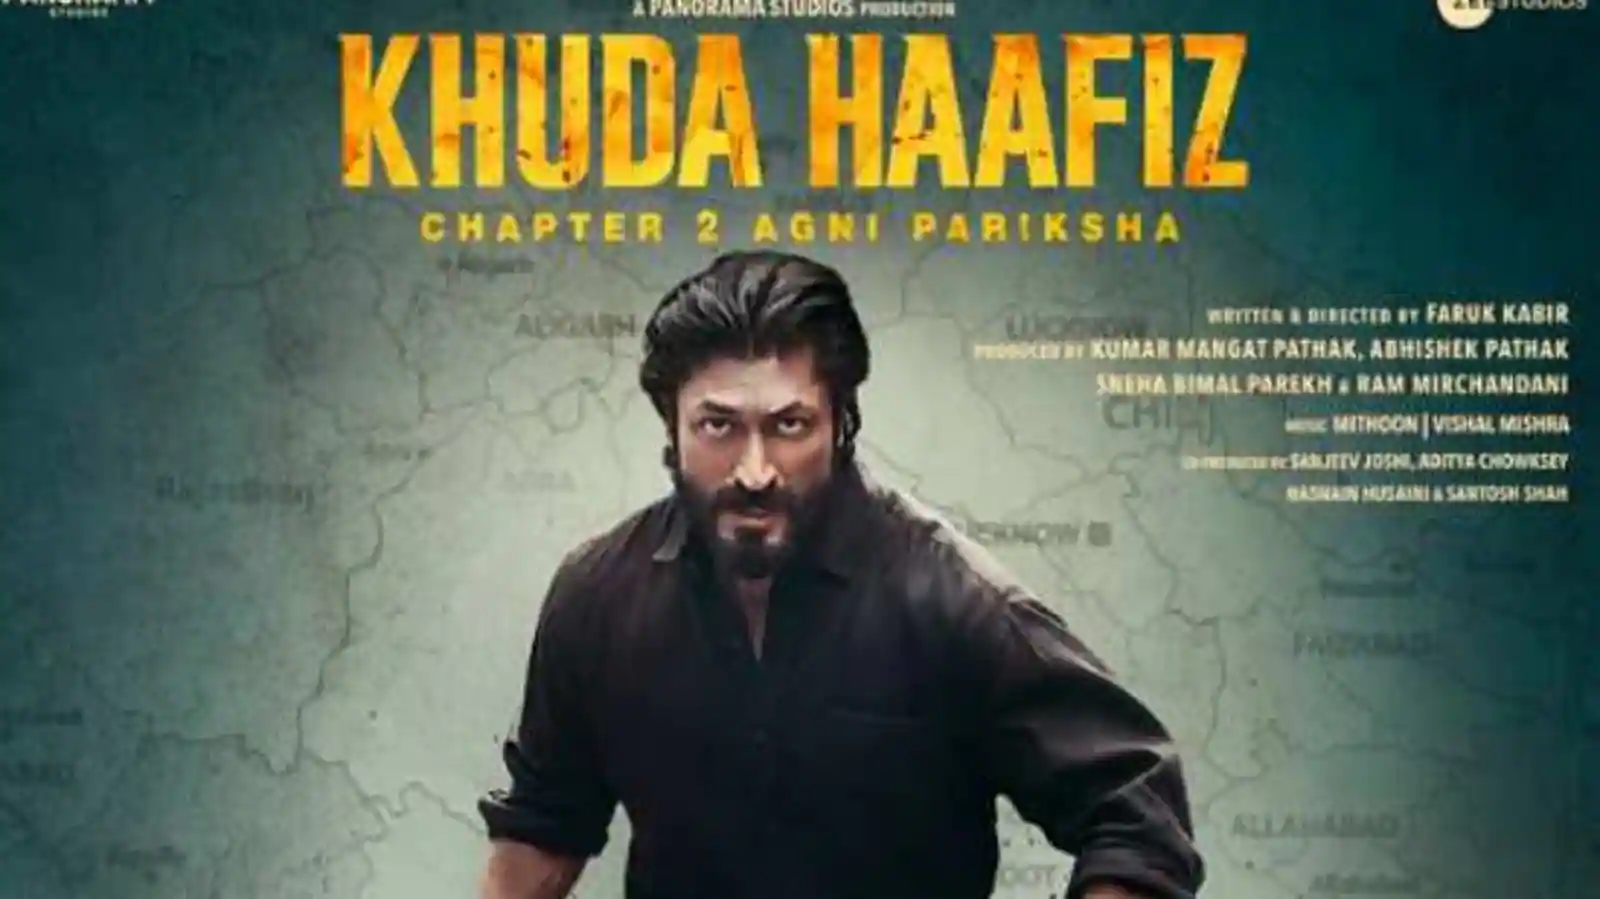 Khuda Haafiz: Chapter ll - Agni Pariksha Box Office Collection & Kamai Day 1 | Khuda Haafiz Chapter 2 BOC Earnings Report, Hit or Flop, Ratings, Review, Cast More Details in Hindi